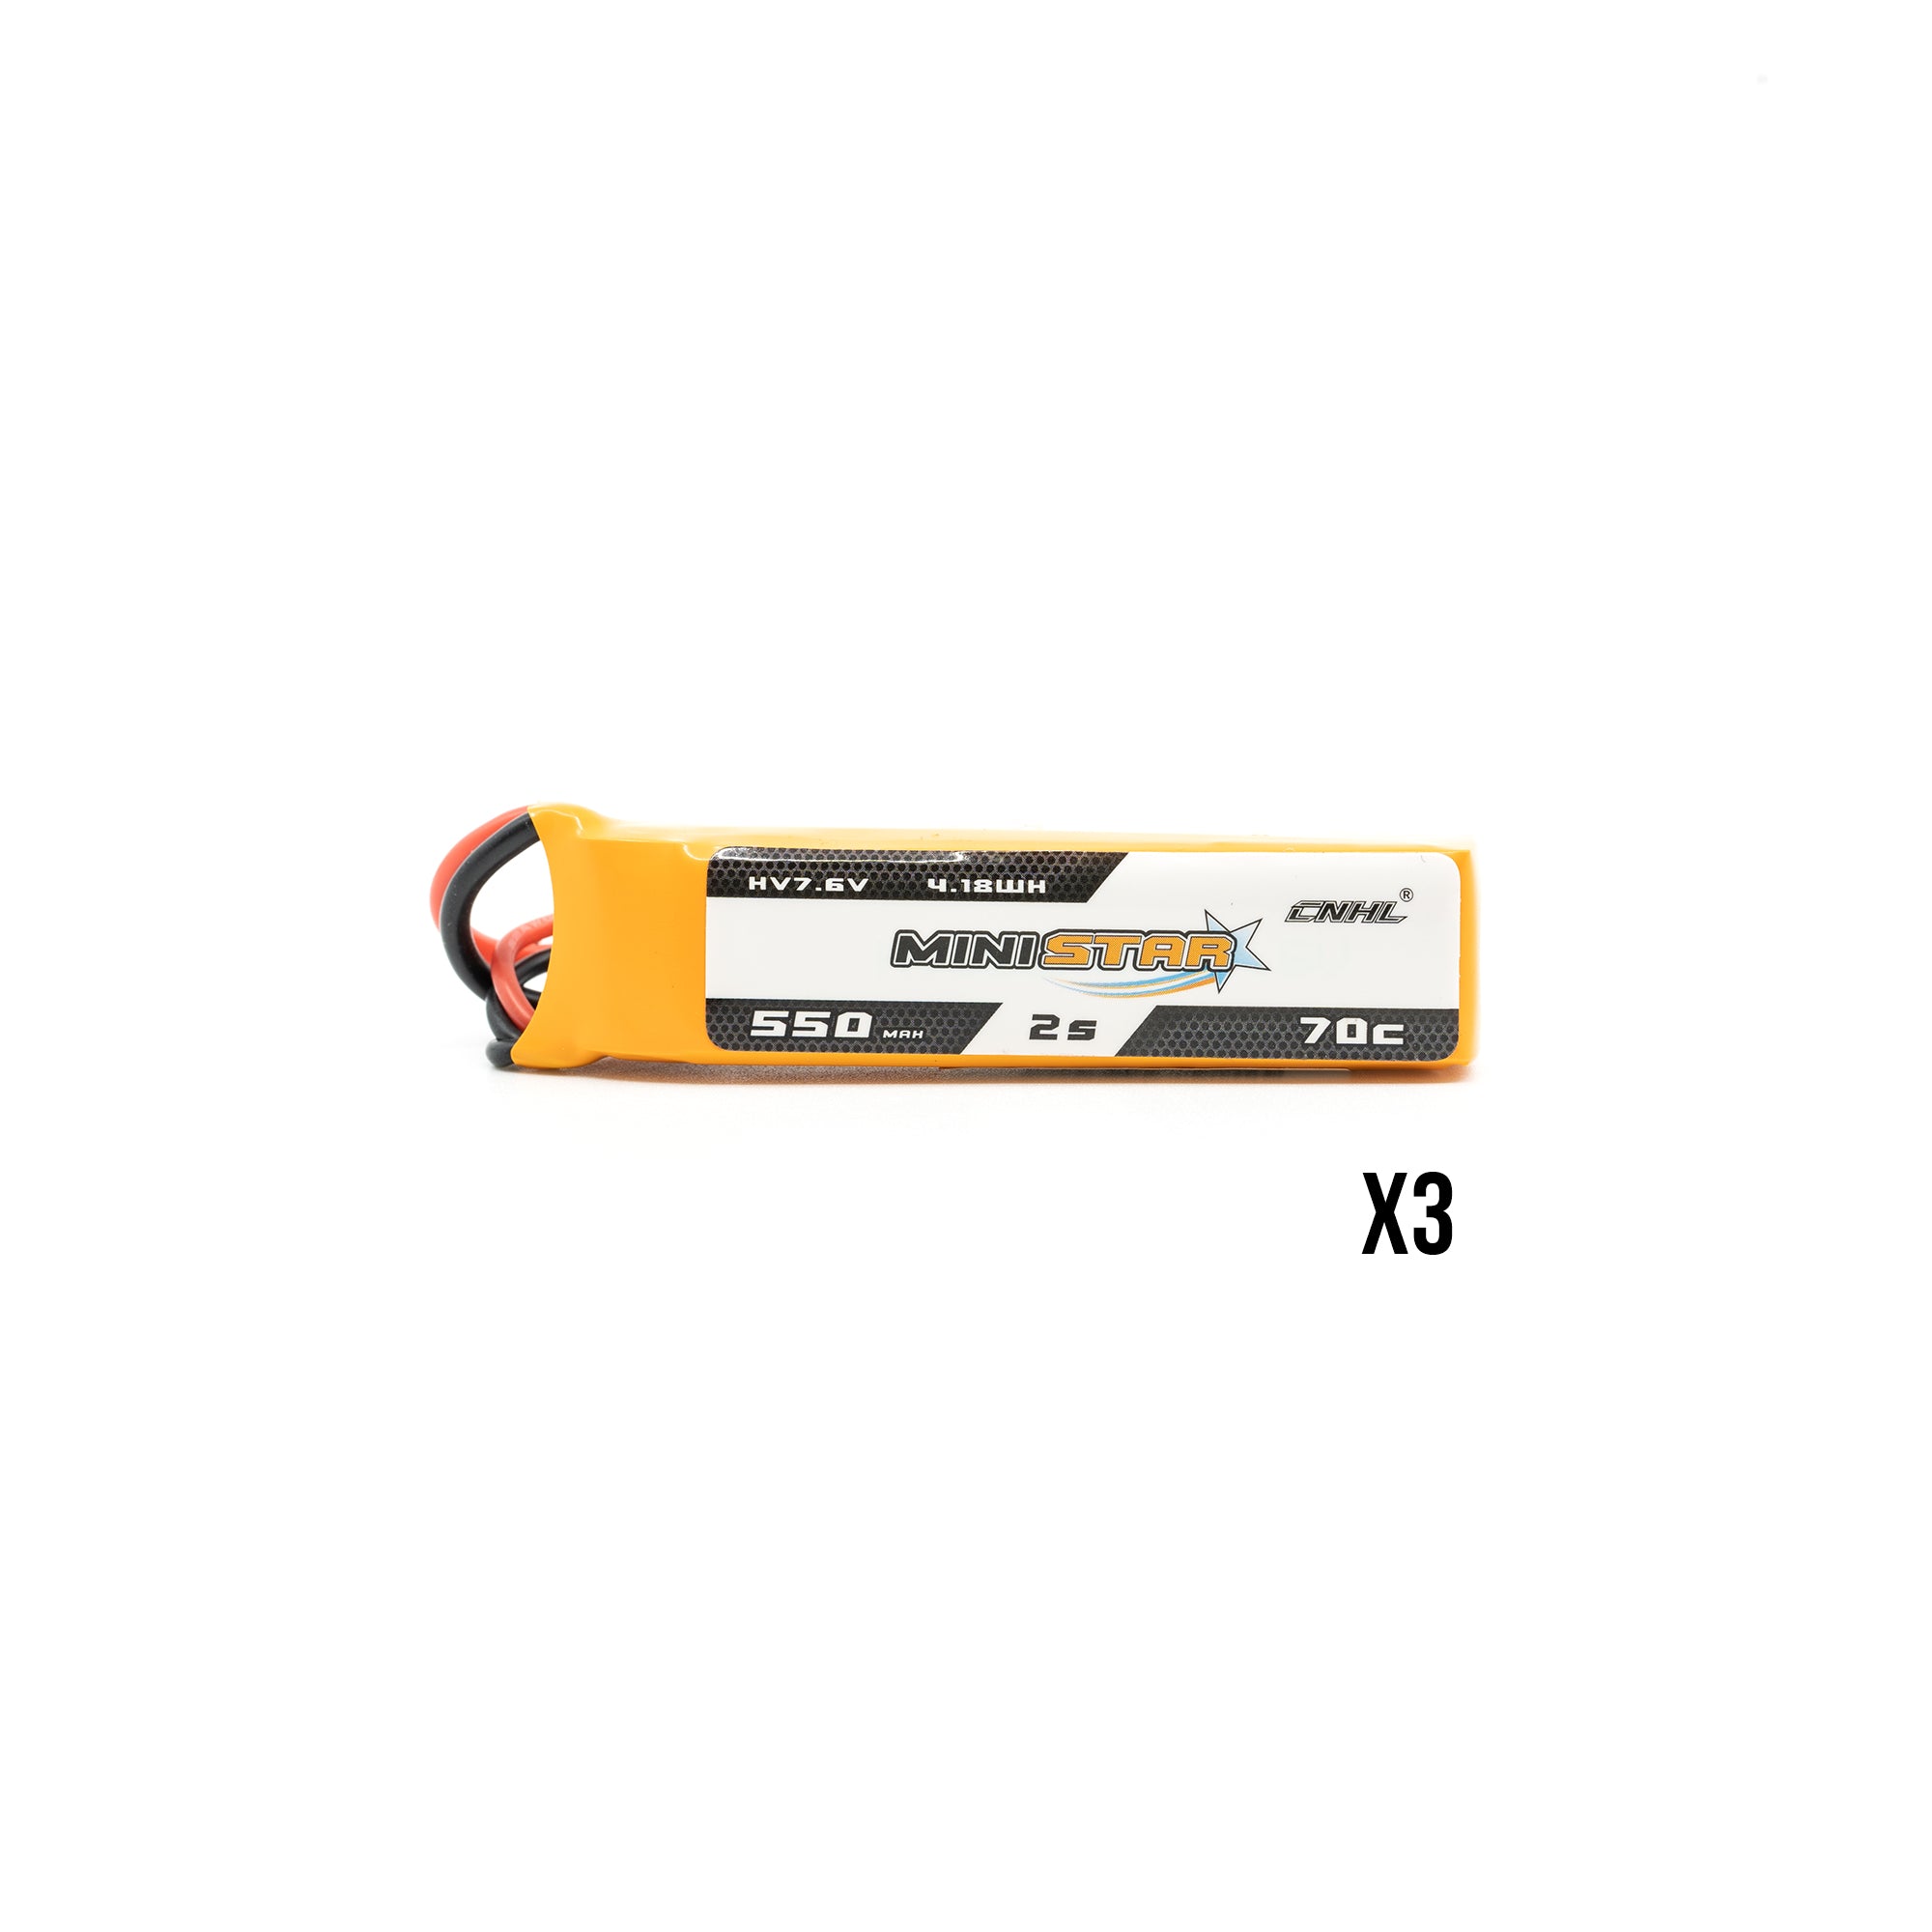 Chinahobbyline CNHL Ministar 550MAH 7.6V 2S 70C HV Lipo Battery (3 Pack) (XT30 Connector) [DG]